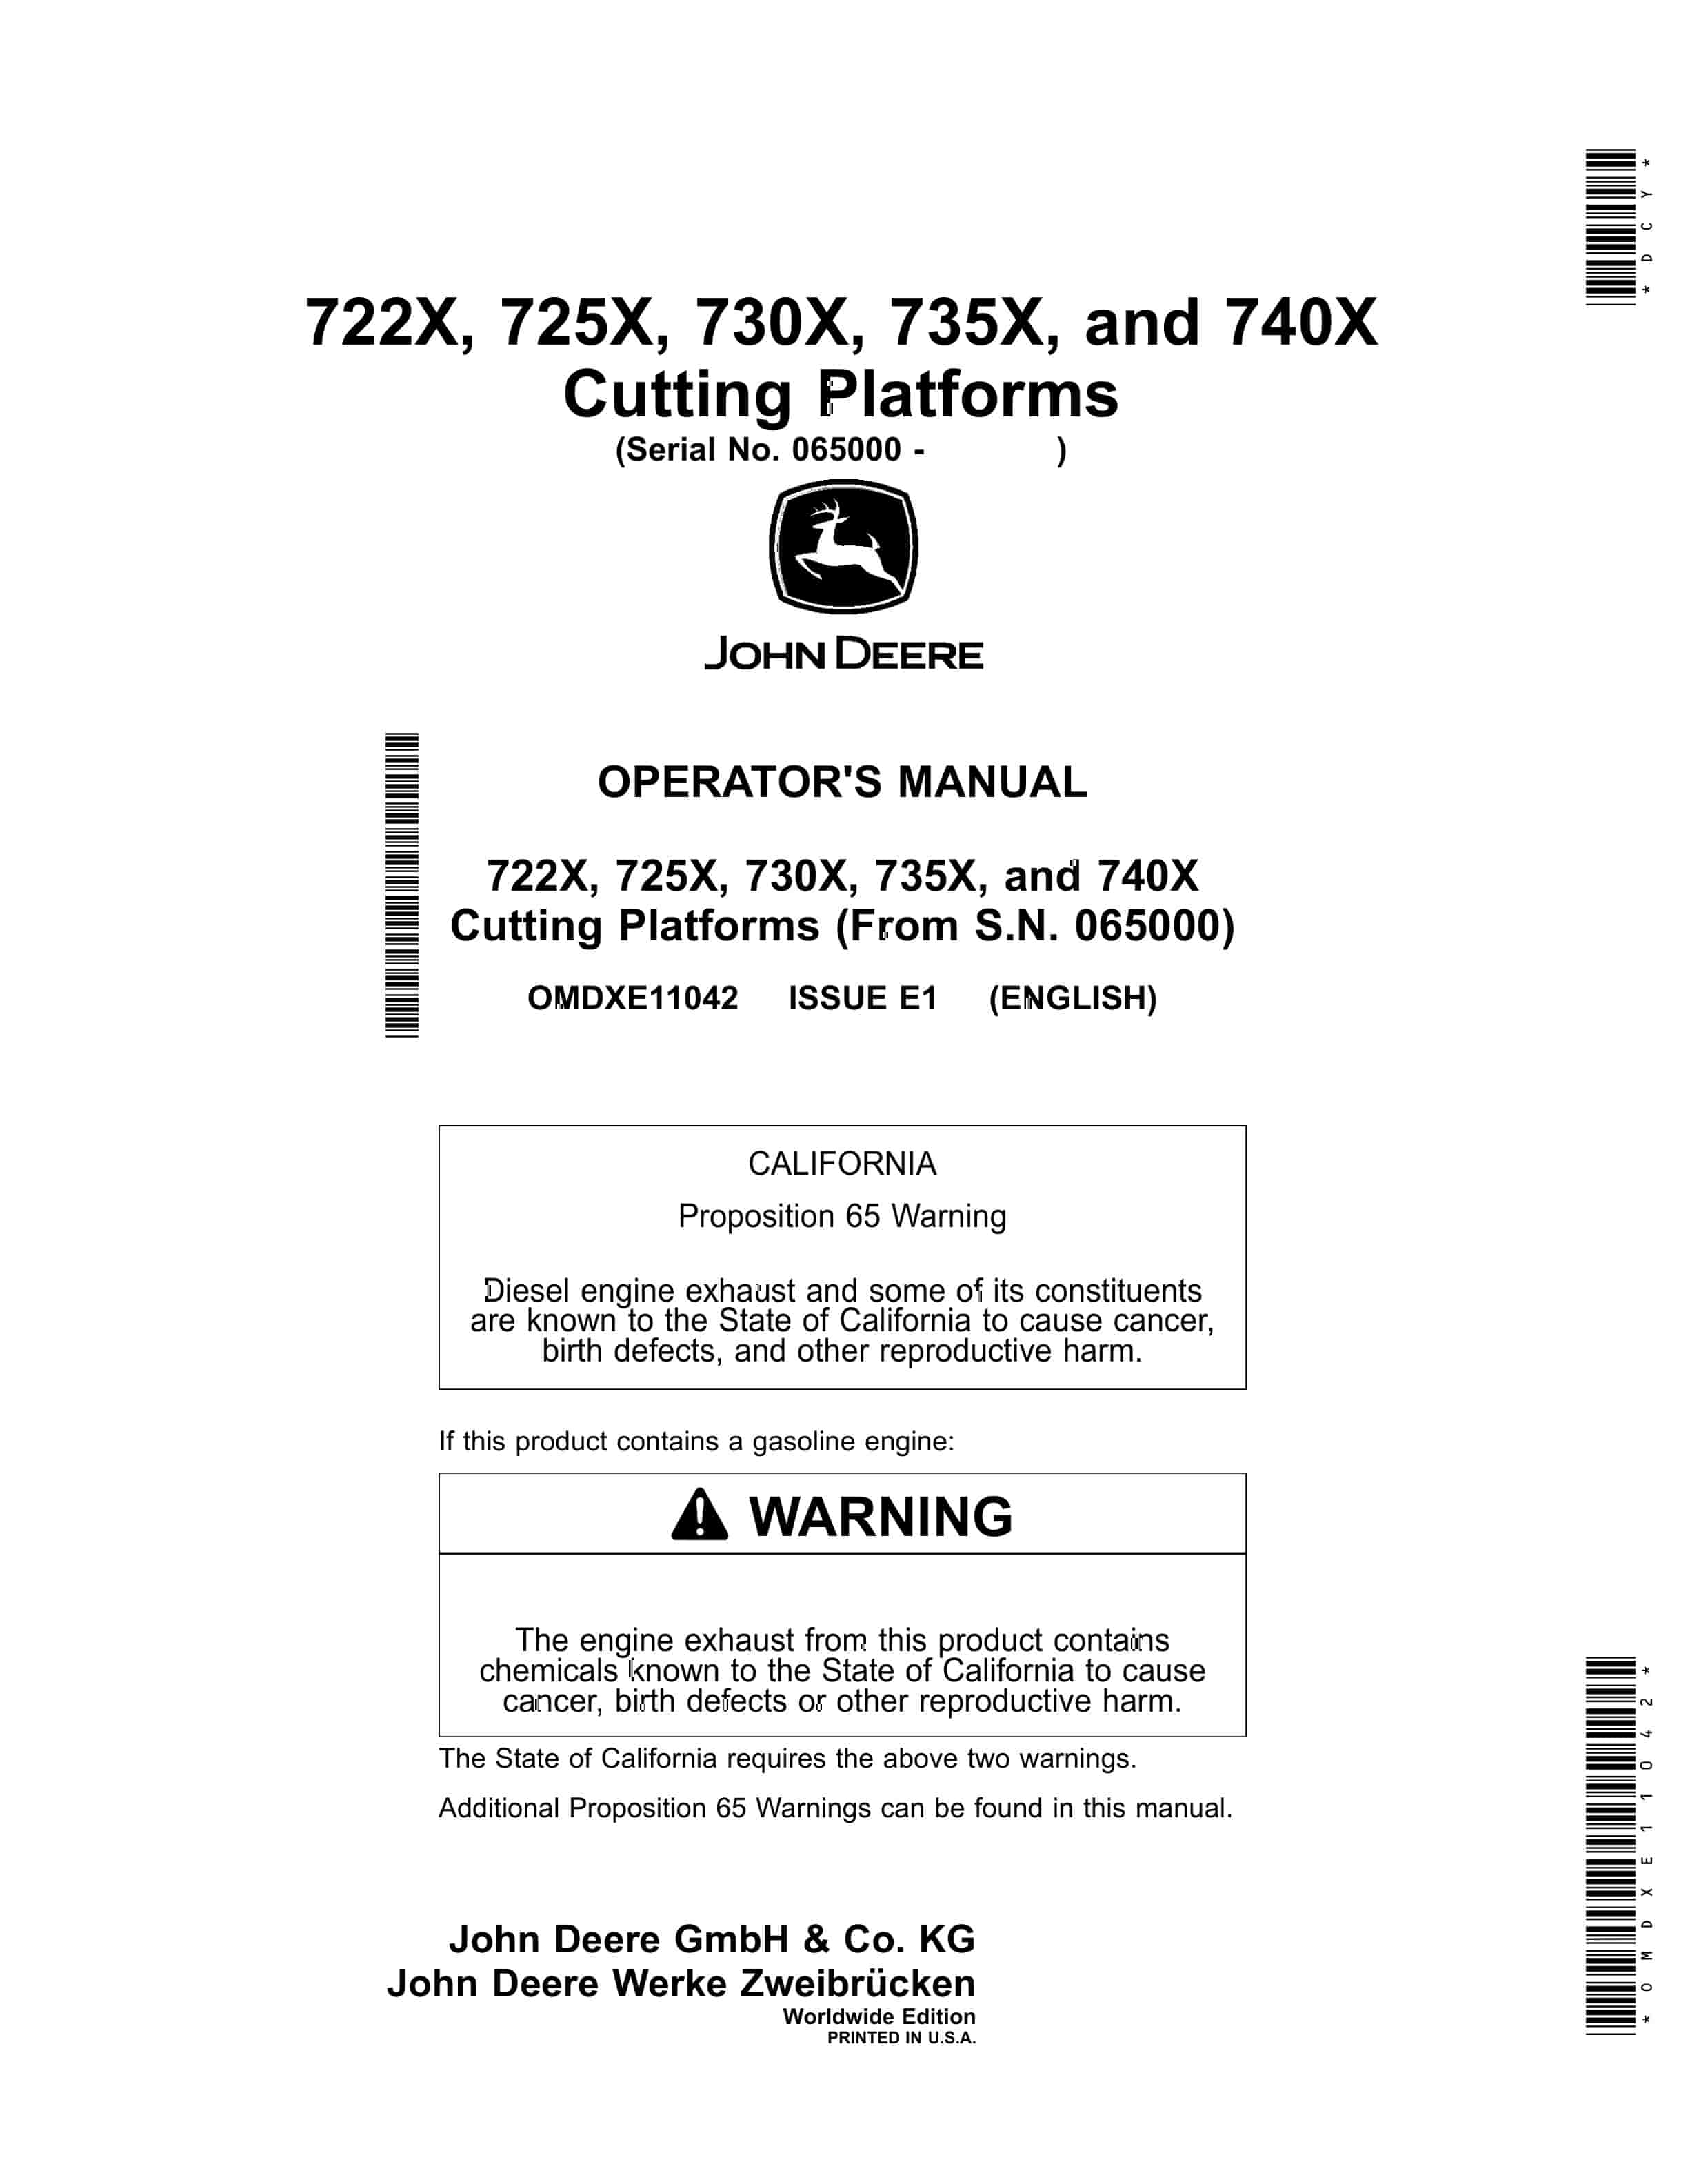 John Deere 722X 725X 730X 735X and 740X Cutting Platform Operator Manual OMDXE11042 1